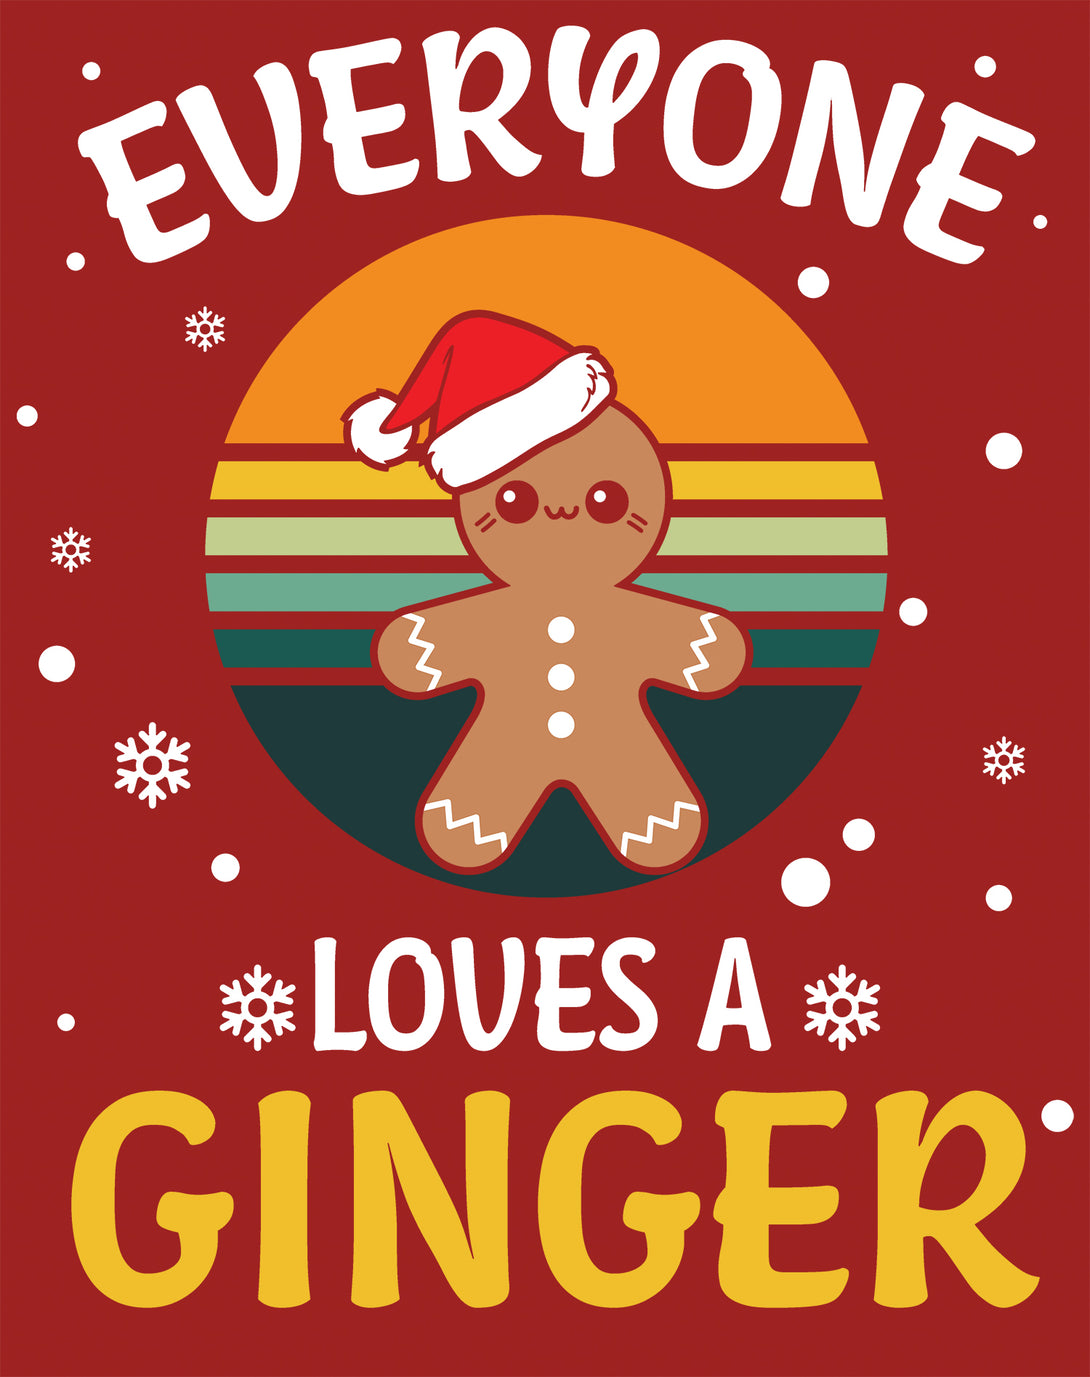 Christmas Ginger Everyone Loves Meme Fun Gingerbread Man Lol Kid's T-Shirt Red - Urban Species Design Close Up